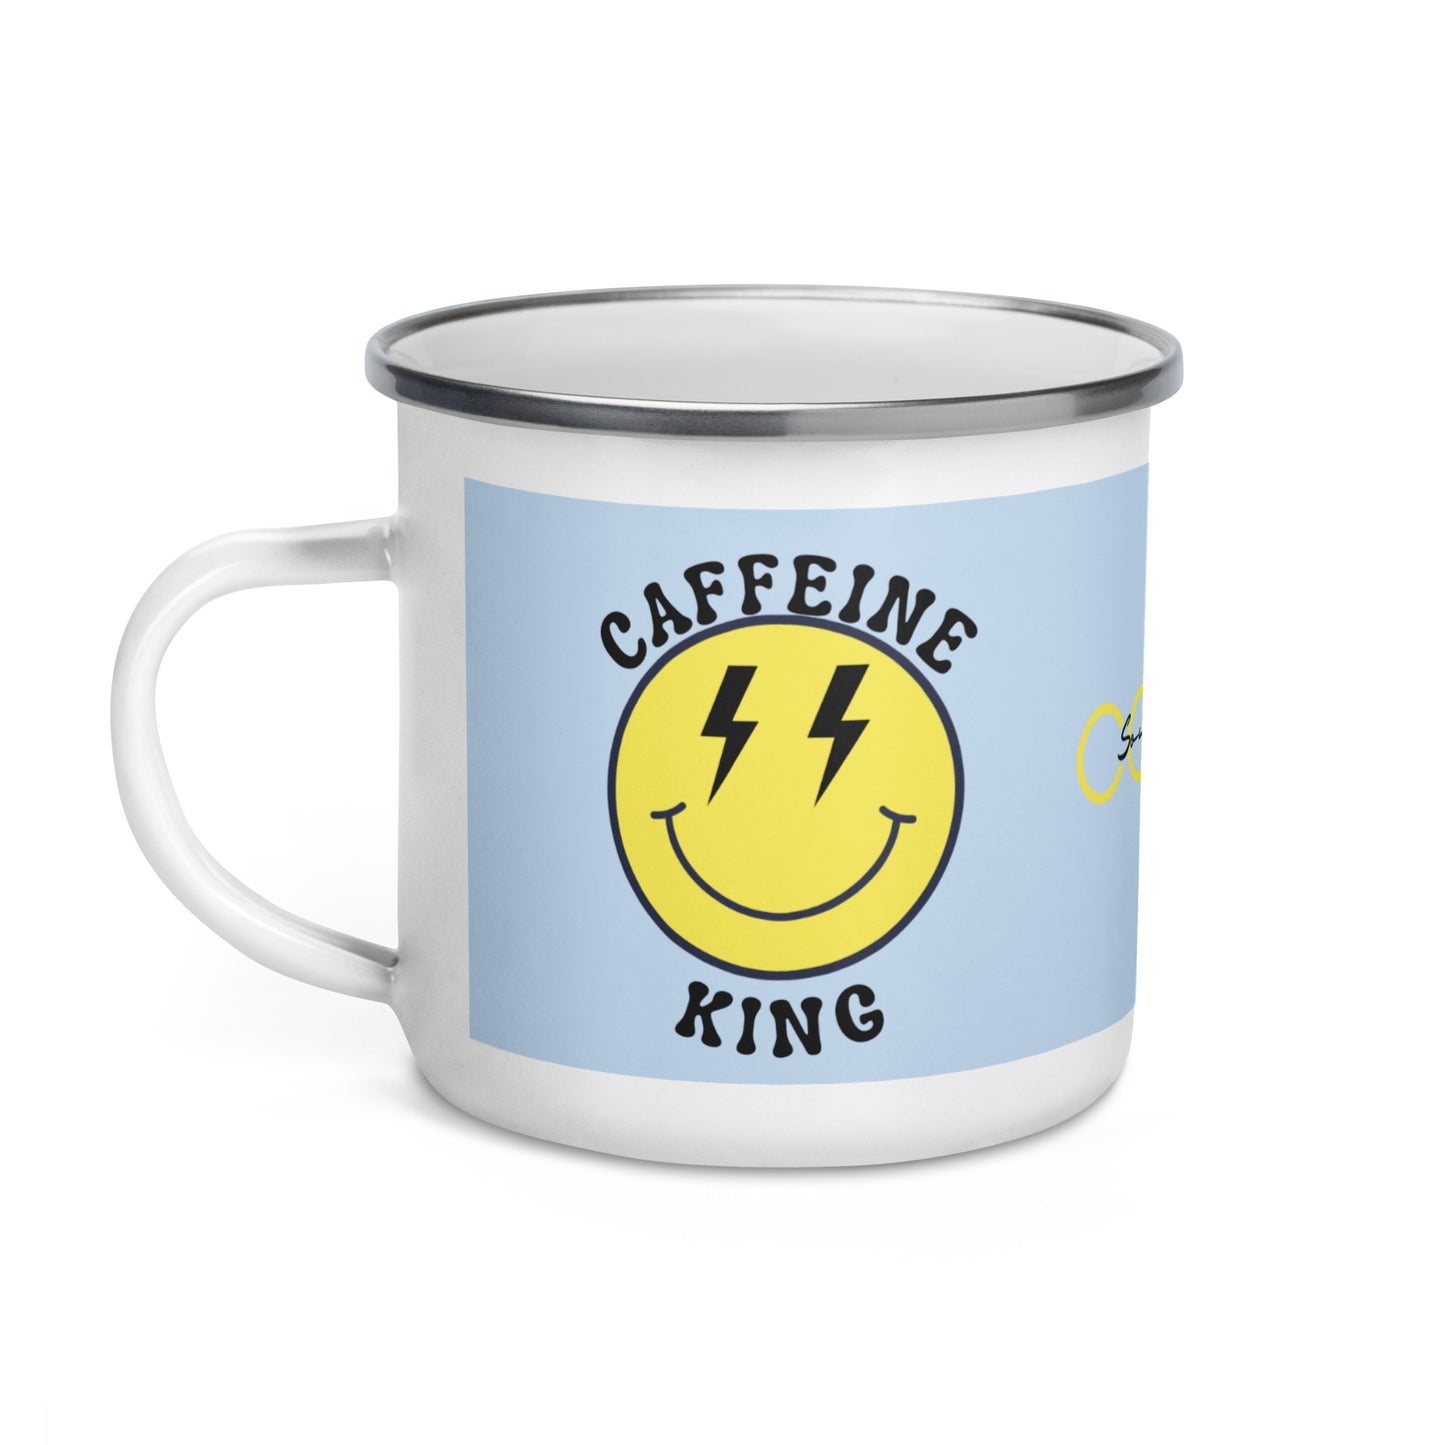 Caffeine King